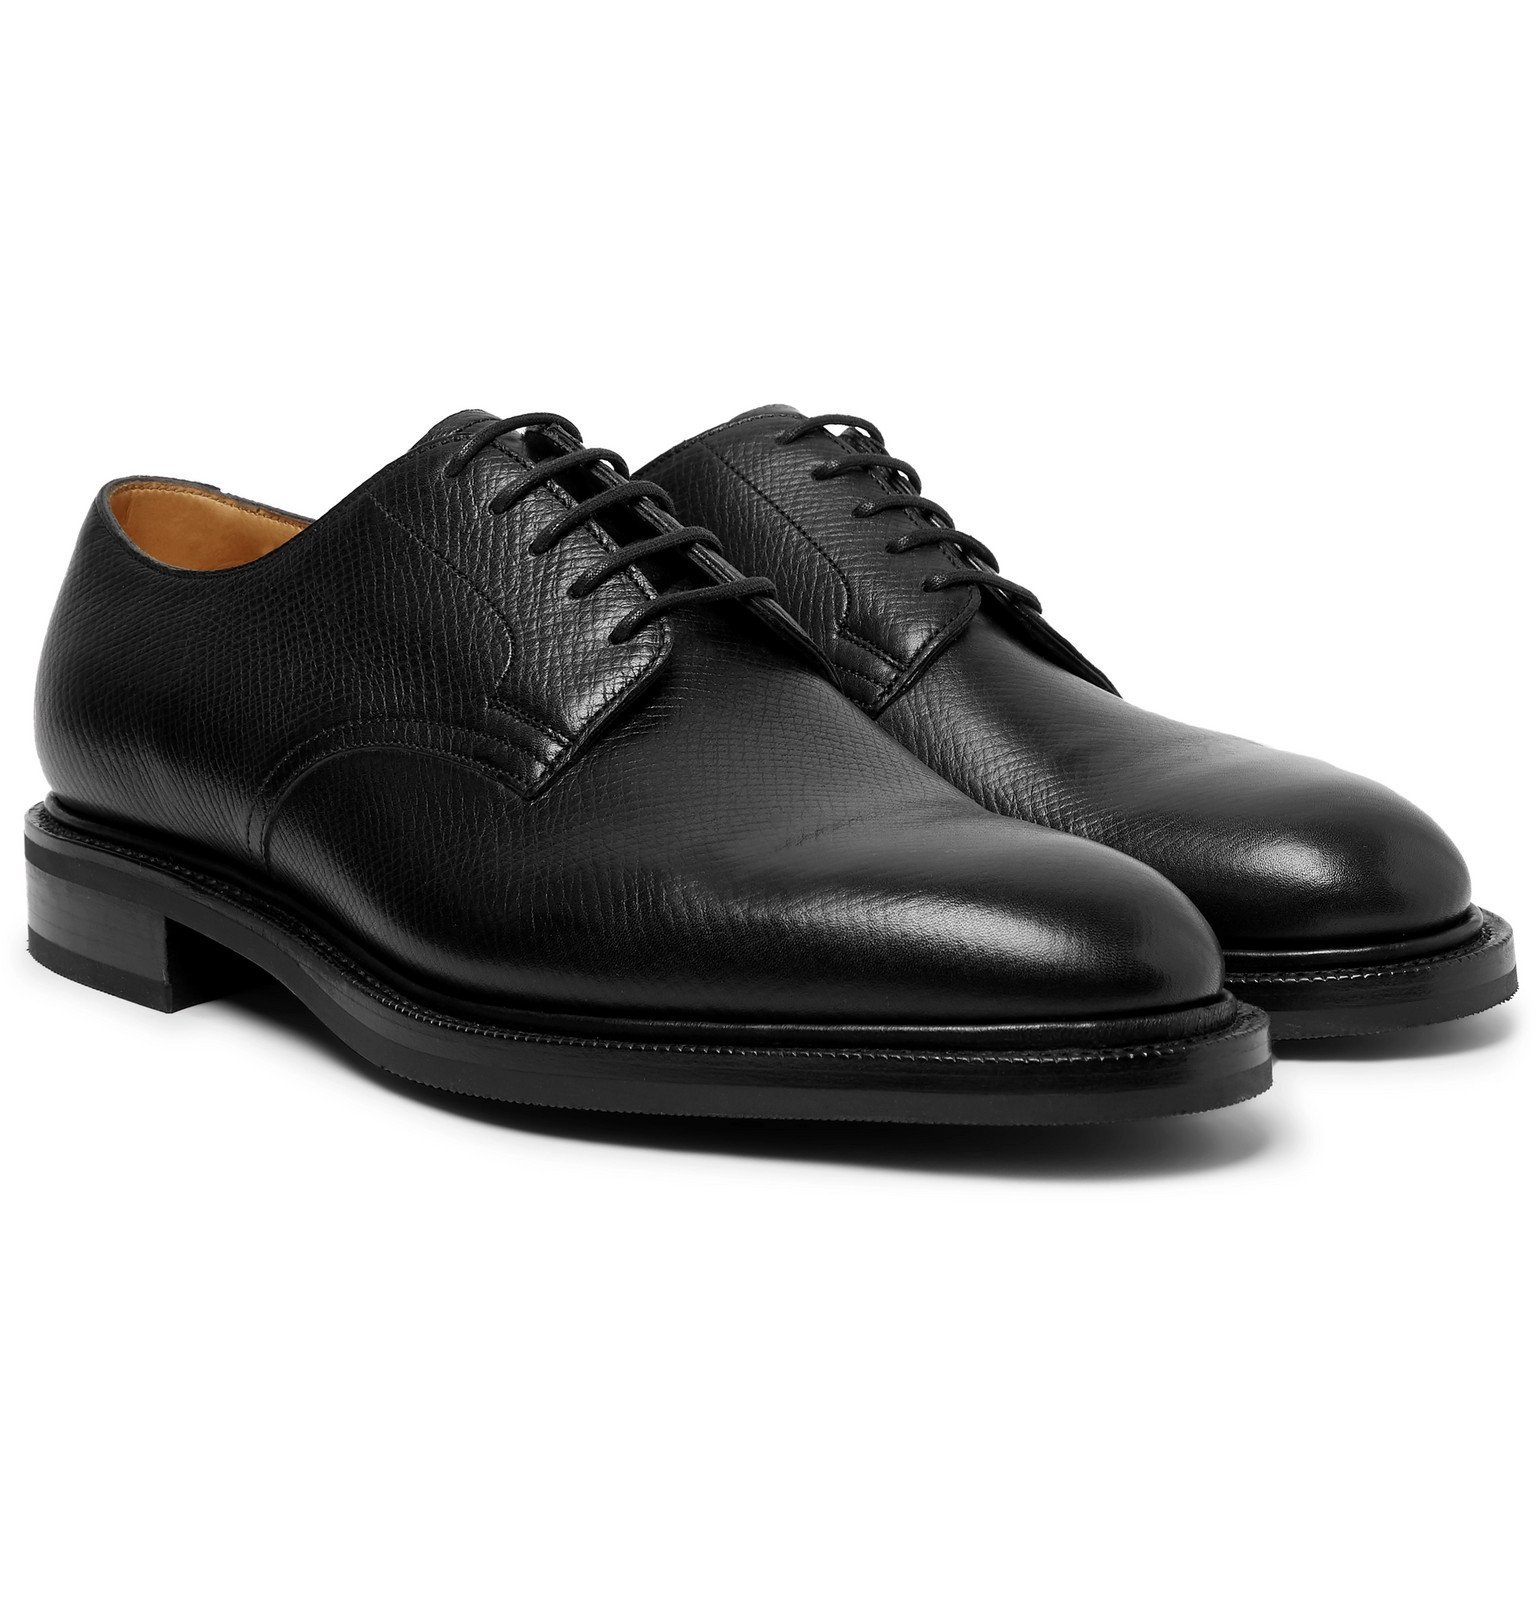 Edward Green - Windermere Suede Derby Shoes - Black Edward Green